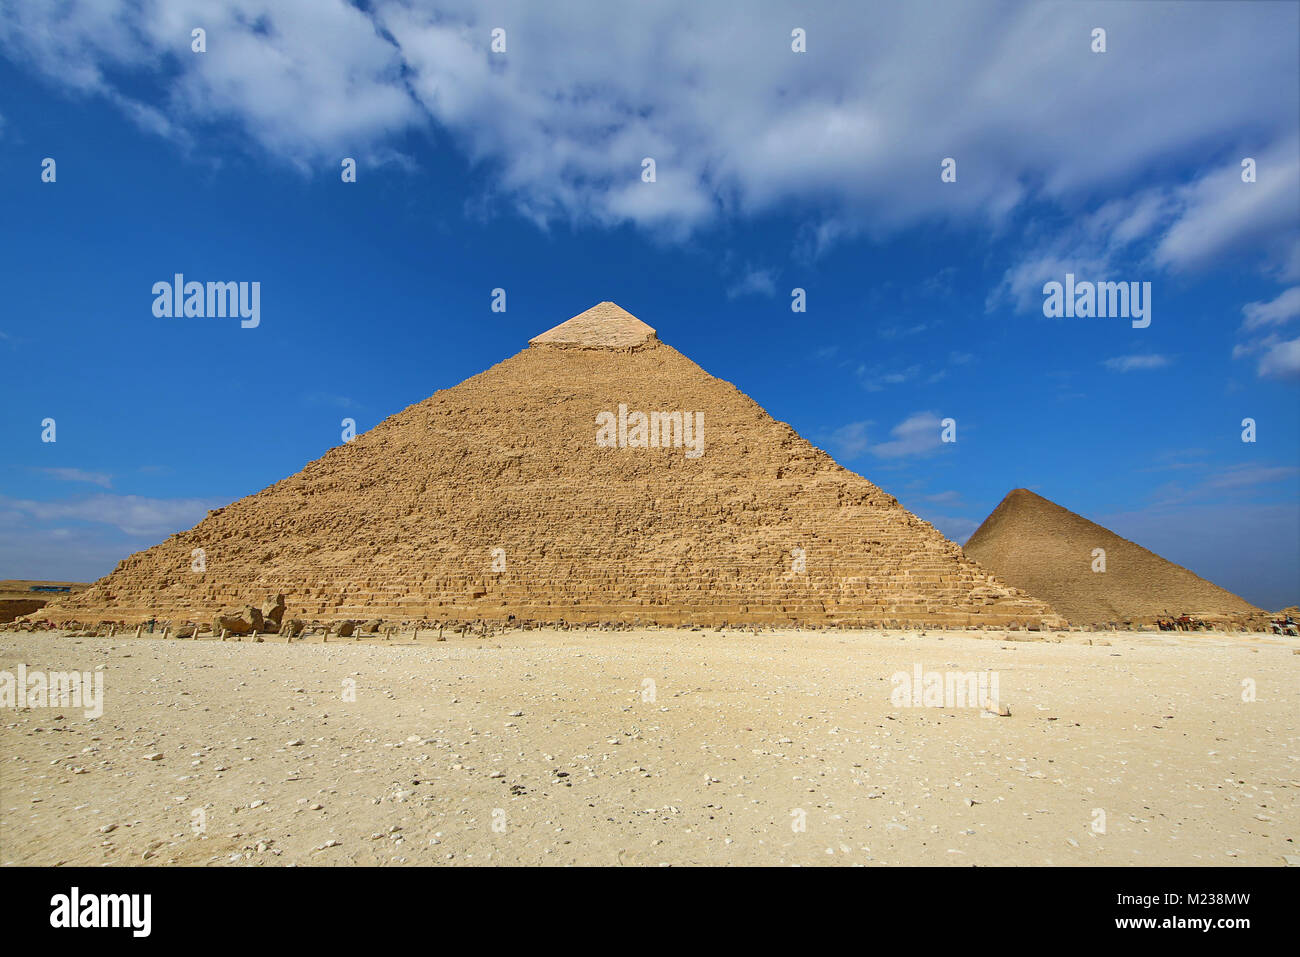 The Pyramid of Khafre (or Chephren) on the Giza Plateau, Cairo, Egypt Stock Photo